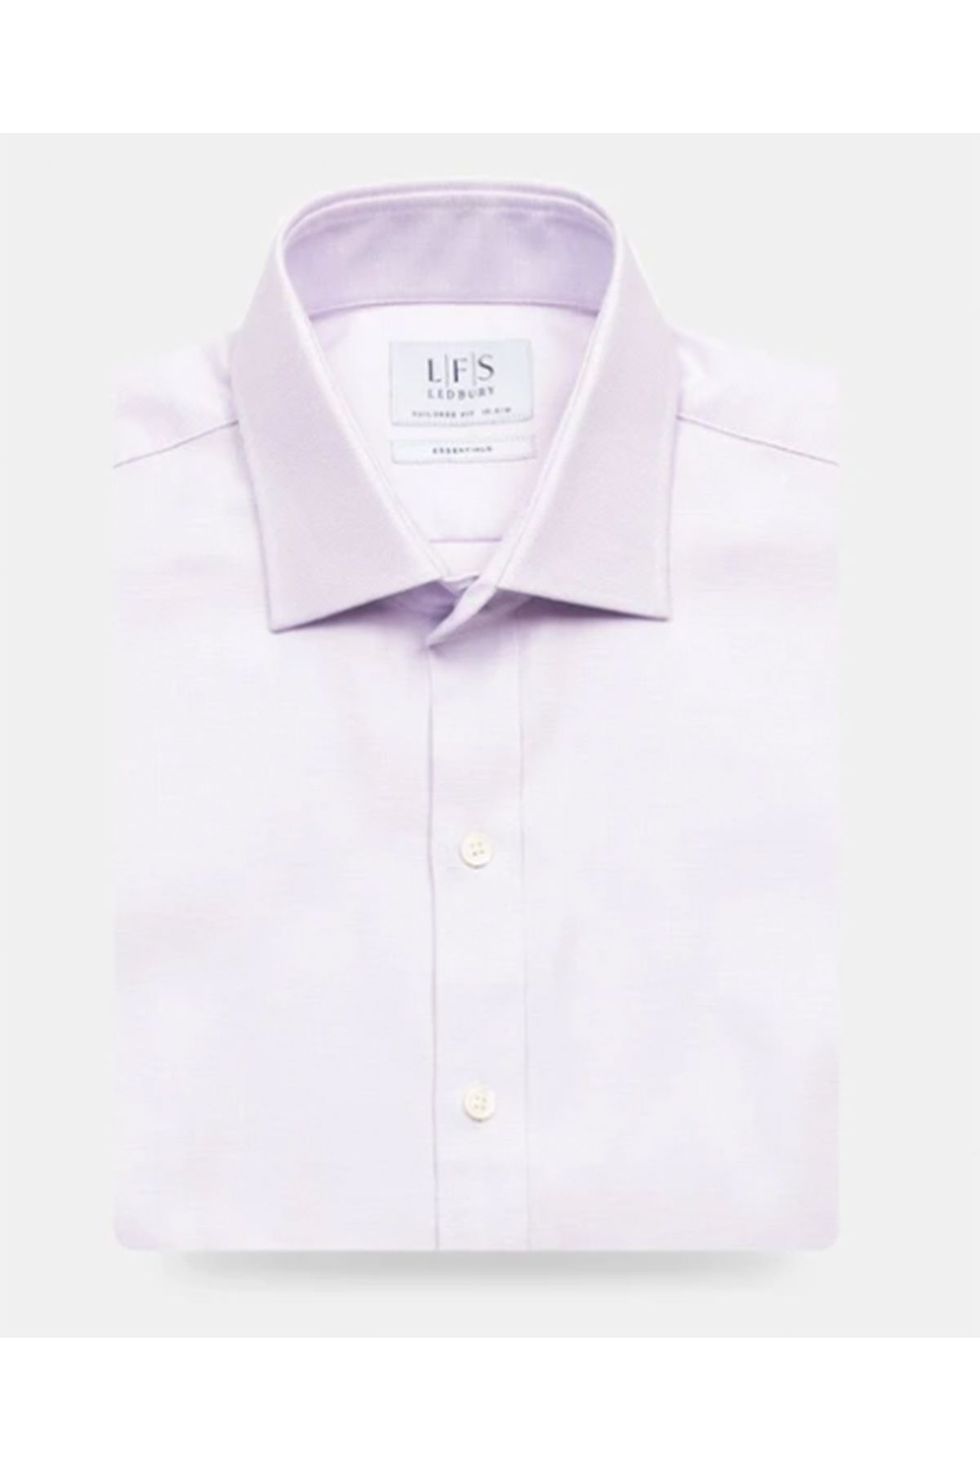 The Lavender Breaburn Oxford Dress Shirt